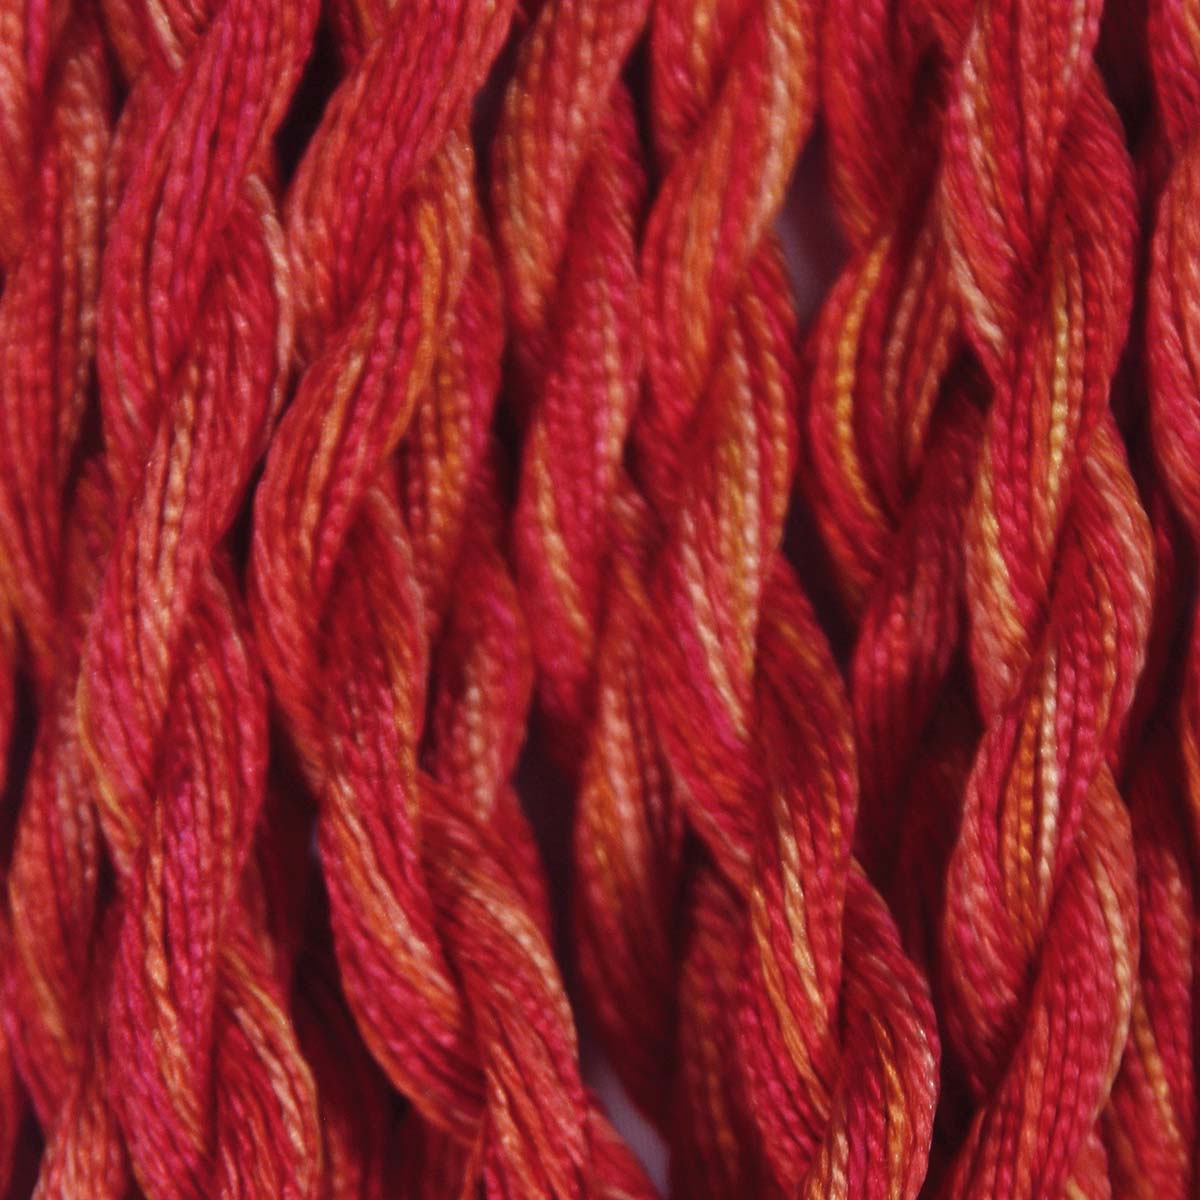 www.colourstreams.com.au Colour Streams Hand Dyed Silk Threads Silken Strands Ophir Exotic Lights Aurora Slow Stitch Embroidery Textile Arts Fibre DL 61 Firedance Oranges Reds